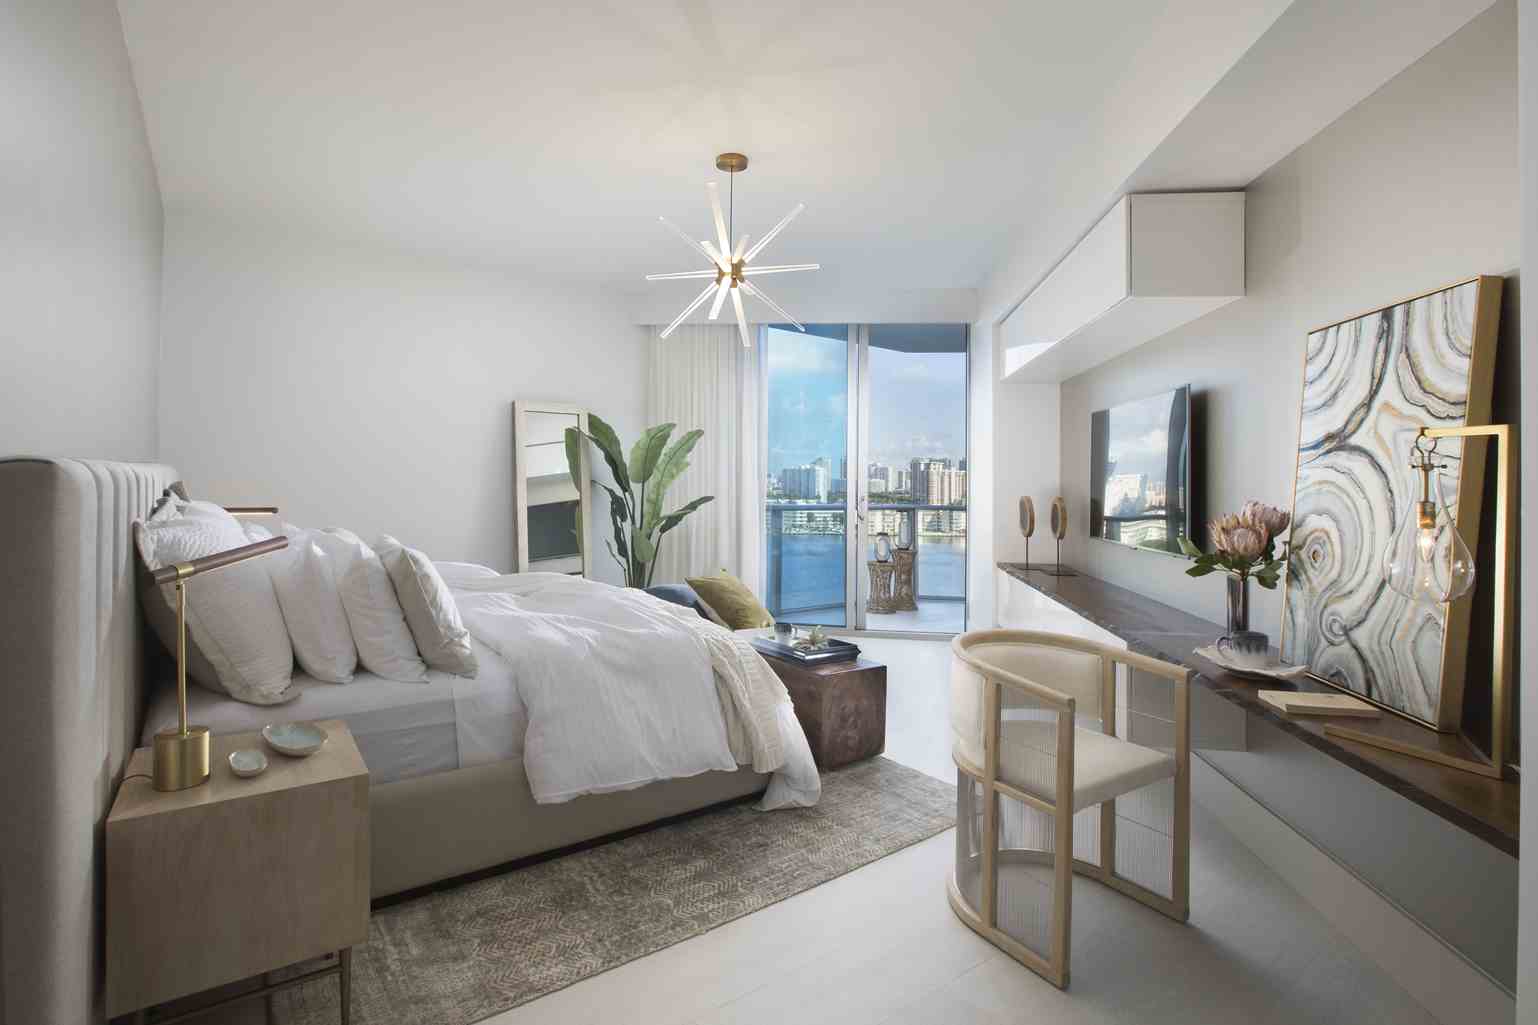 interior condo bedroom master modern miami interiors coastal designers inspire dkor residential load dkorinteriors portfolio